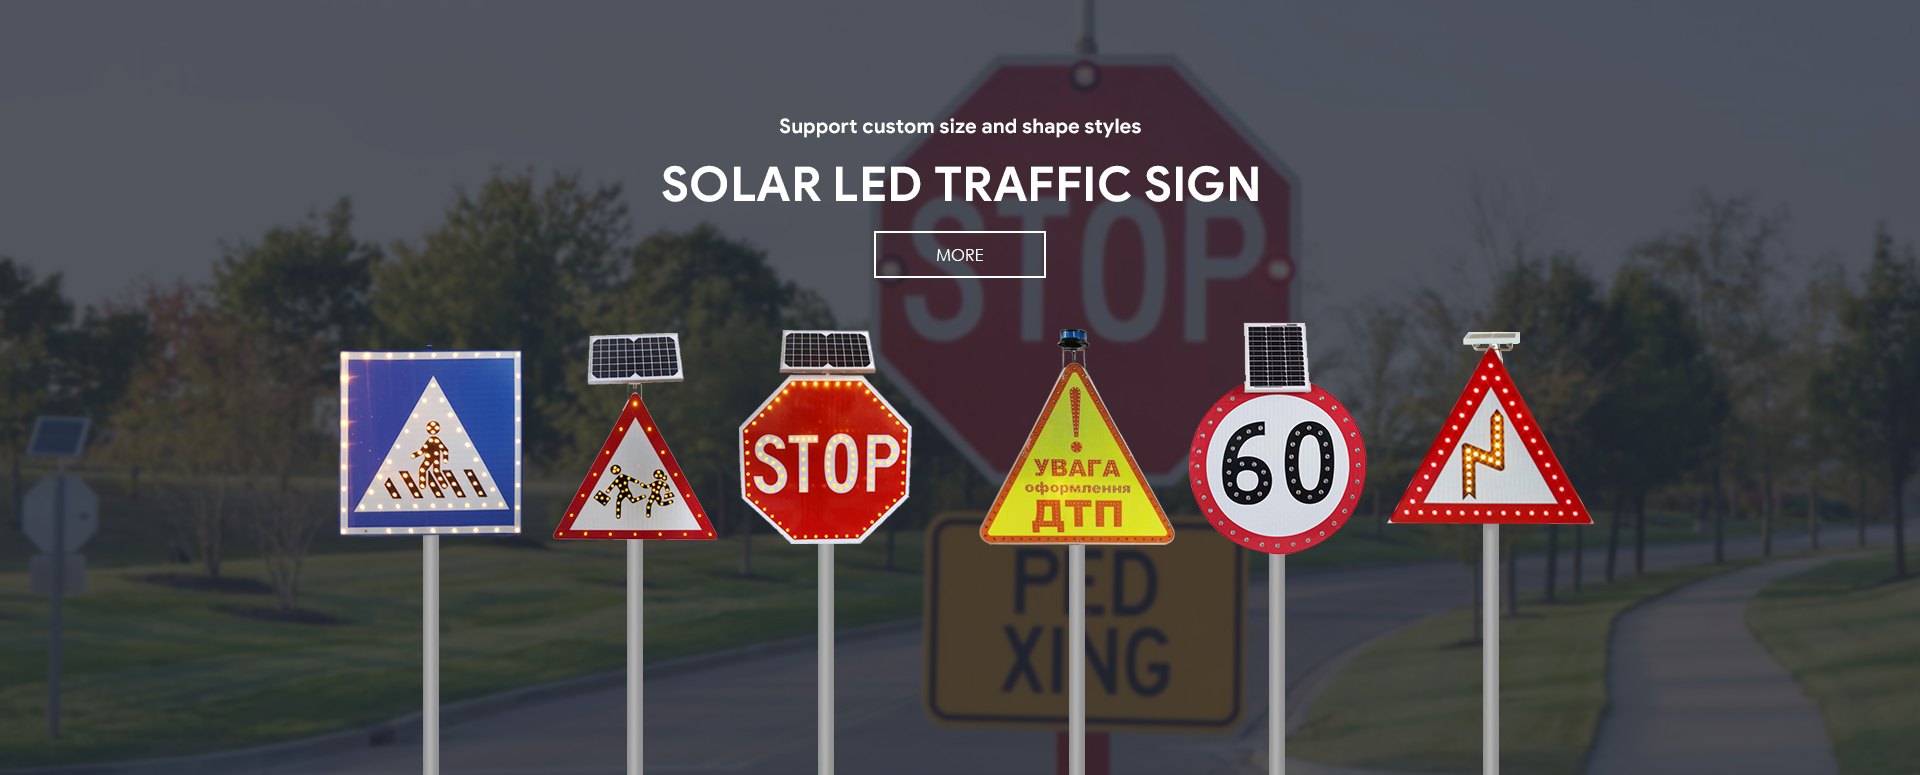 solar traffic sign